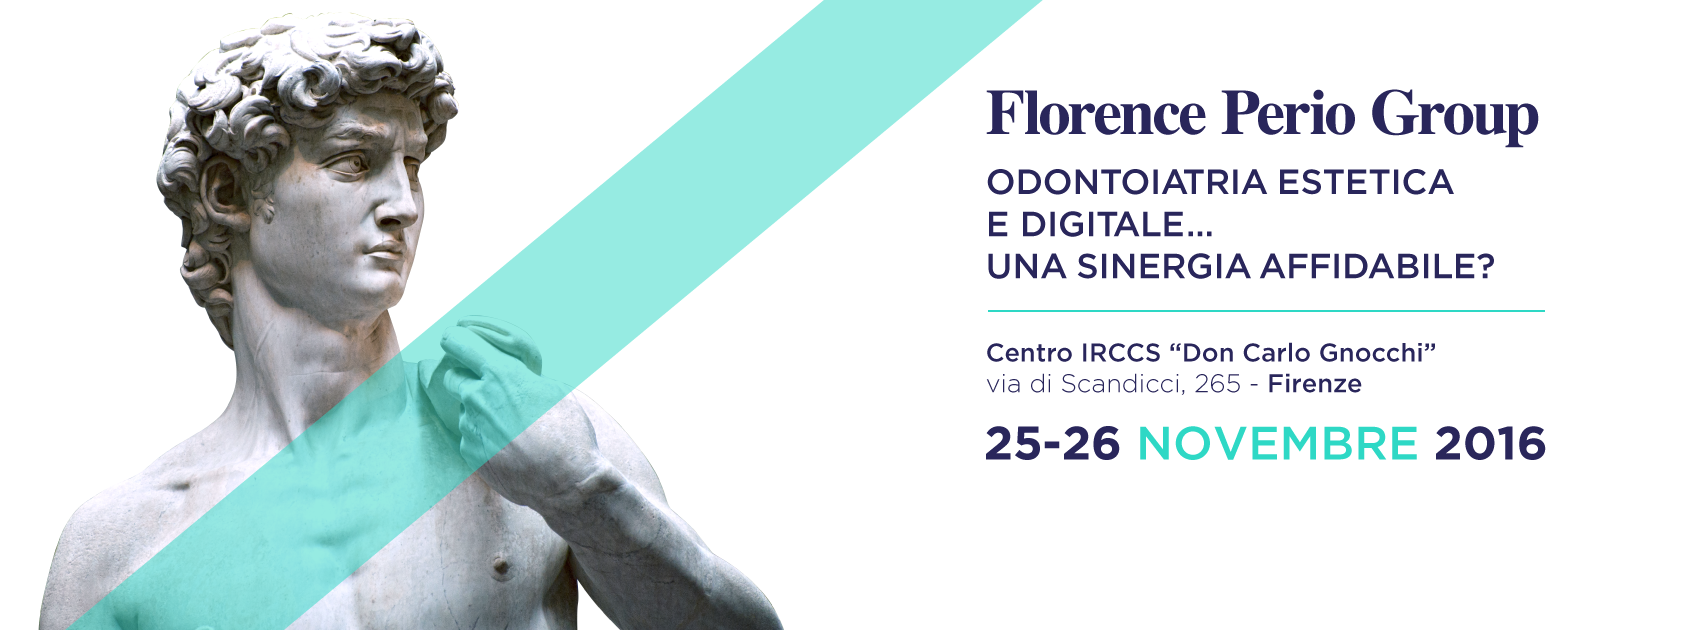 Florence Perio Group. Odontoiatria estetica e digitale… Una sinergia affidabile?